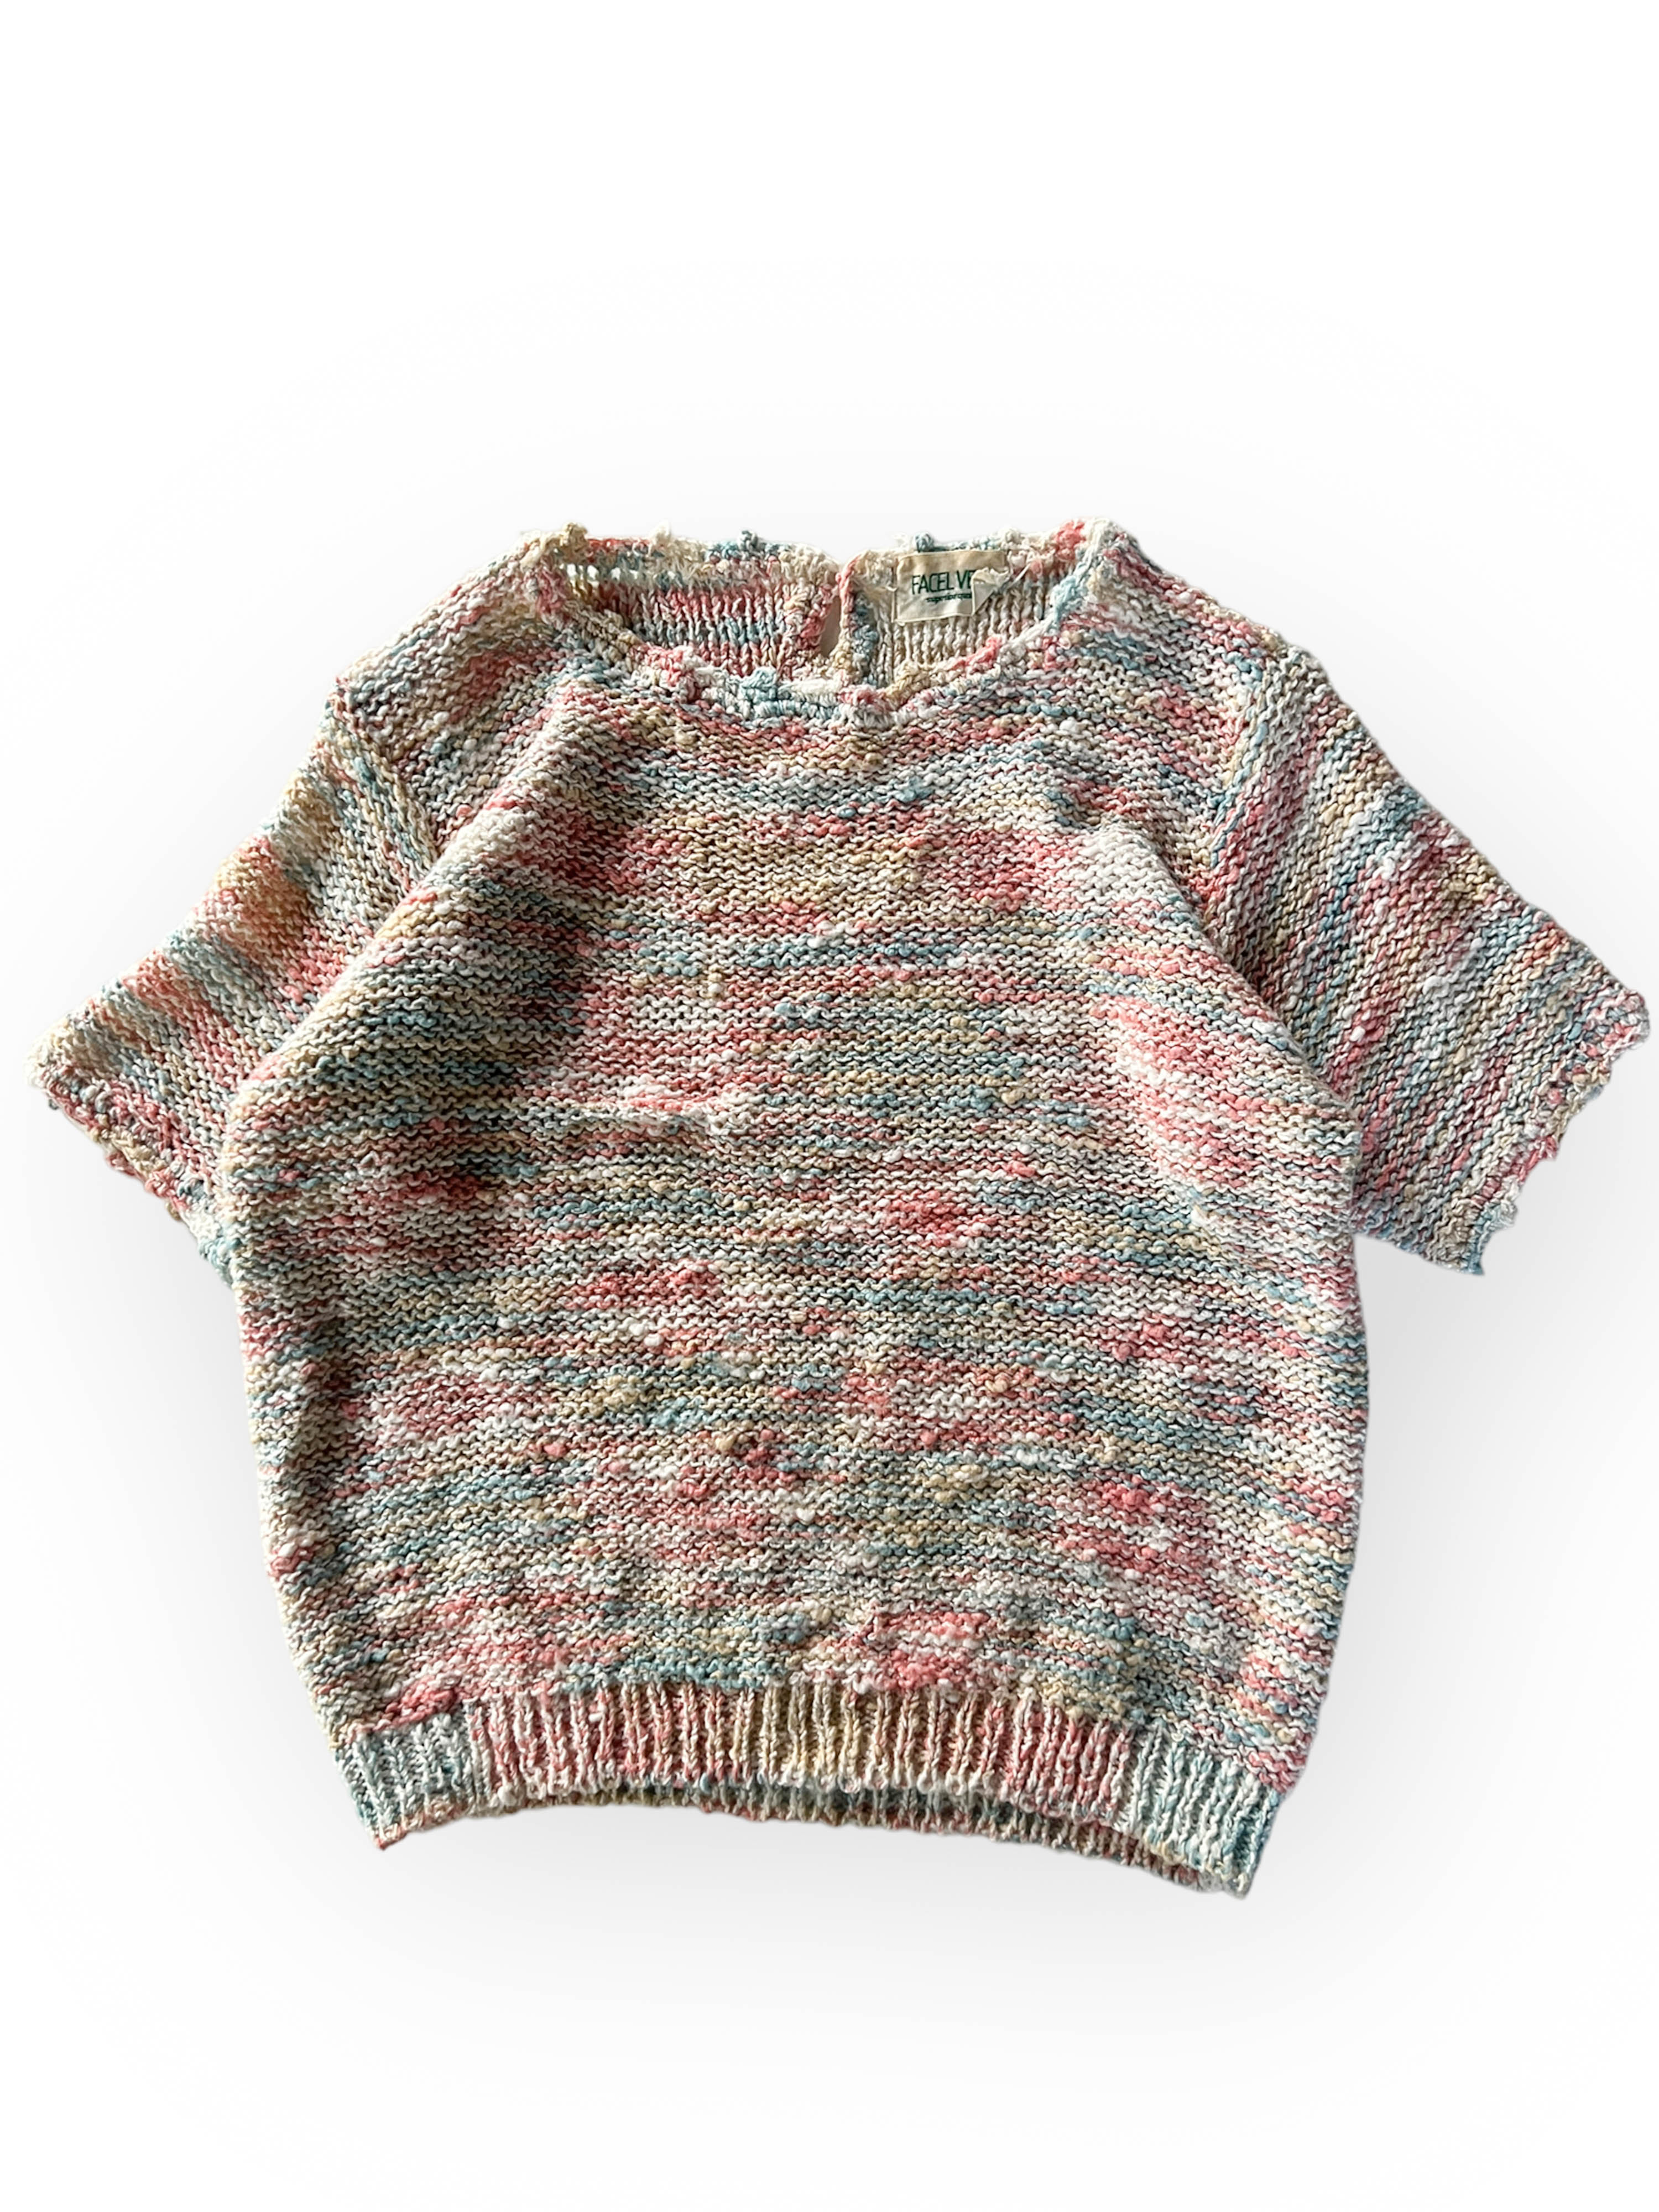 vintage color knit top